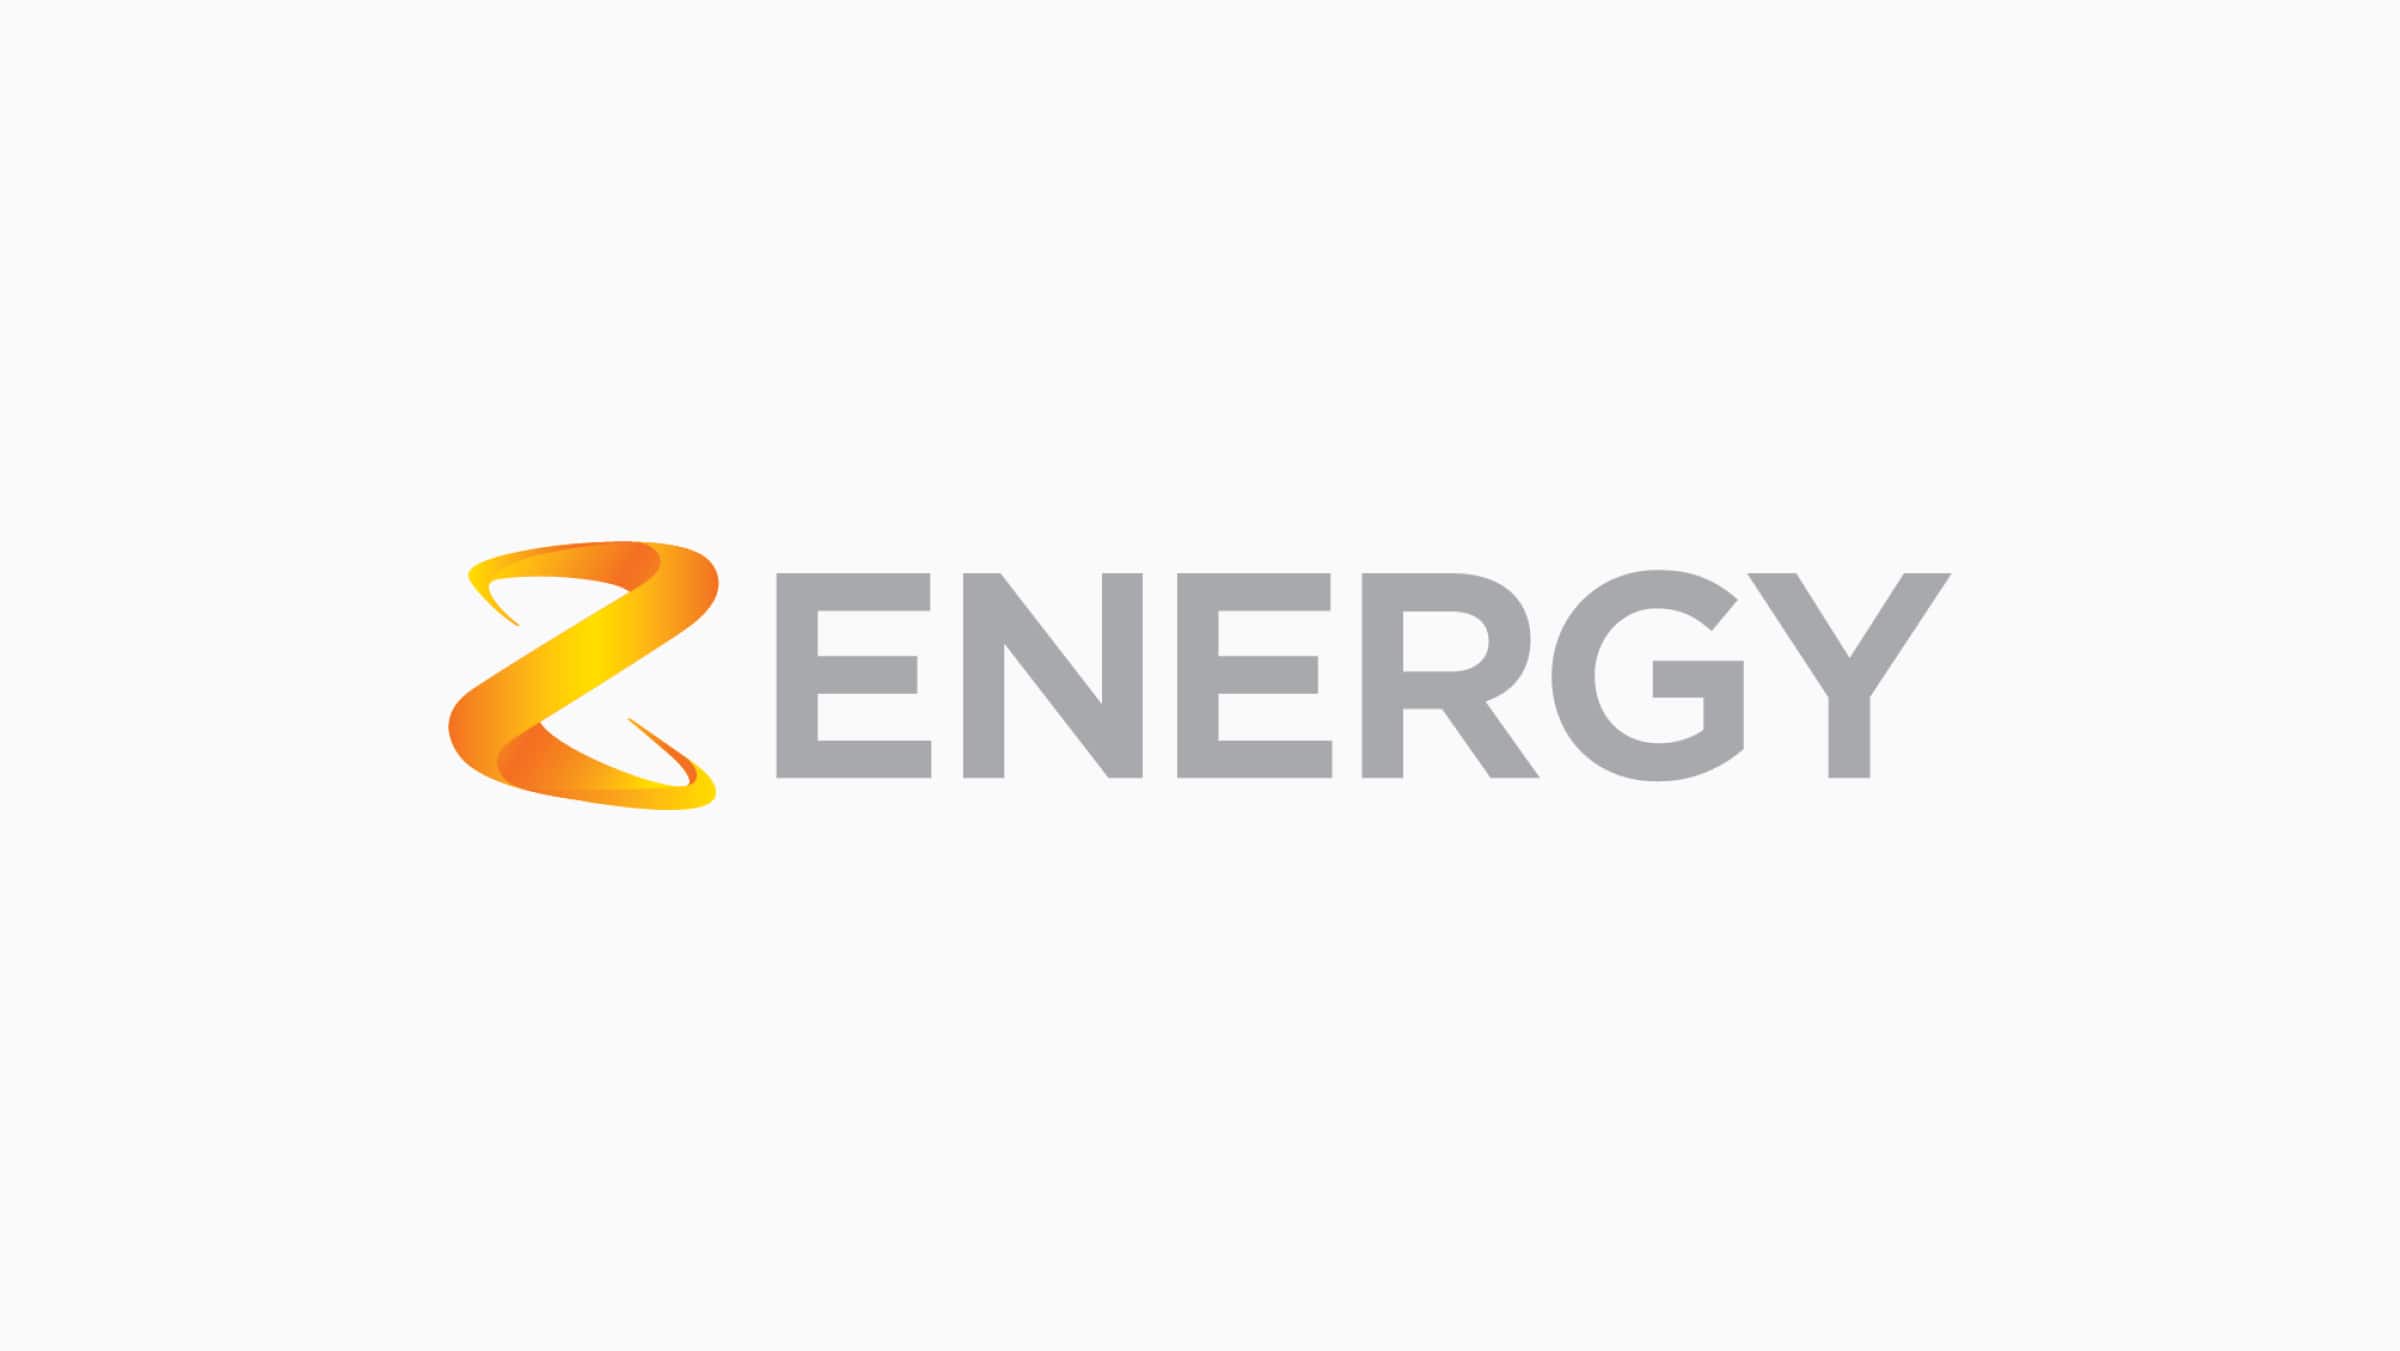 The Z Energy logo